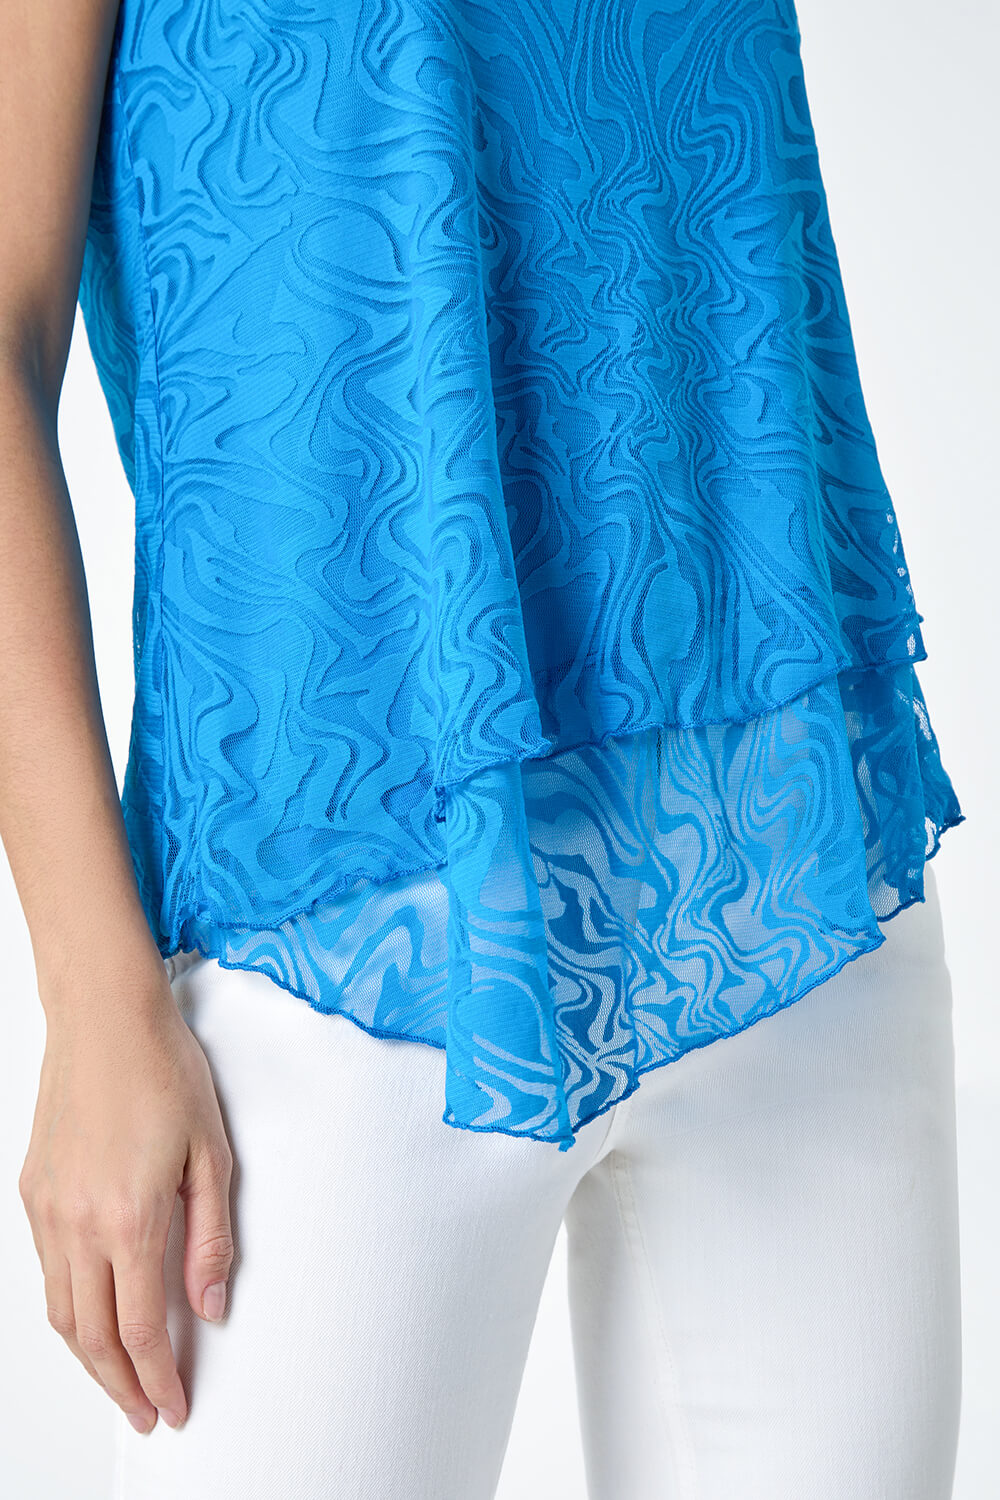 Blue Textured Swirl Print Overlay Top, Image 5 of 5